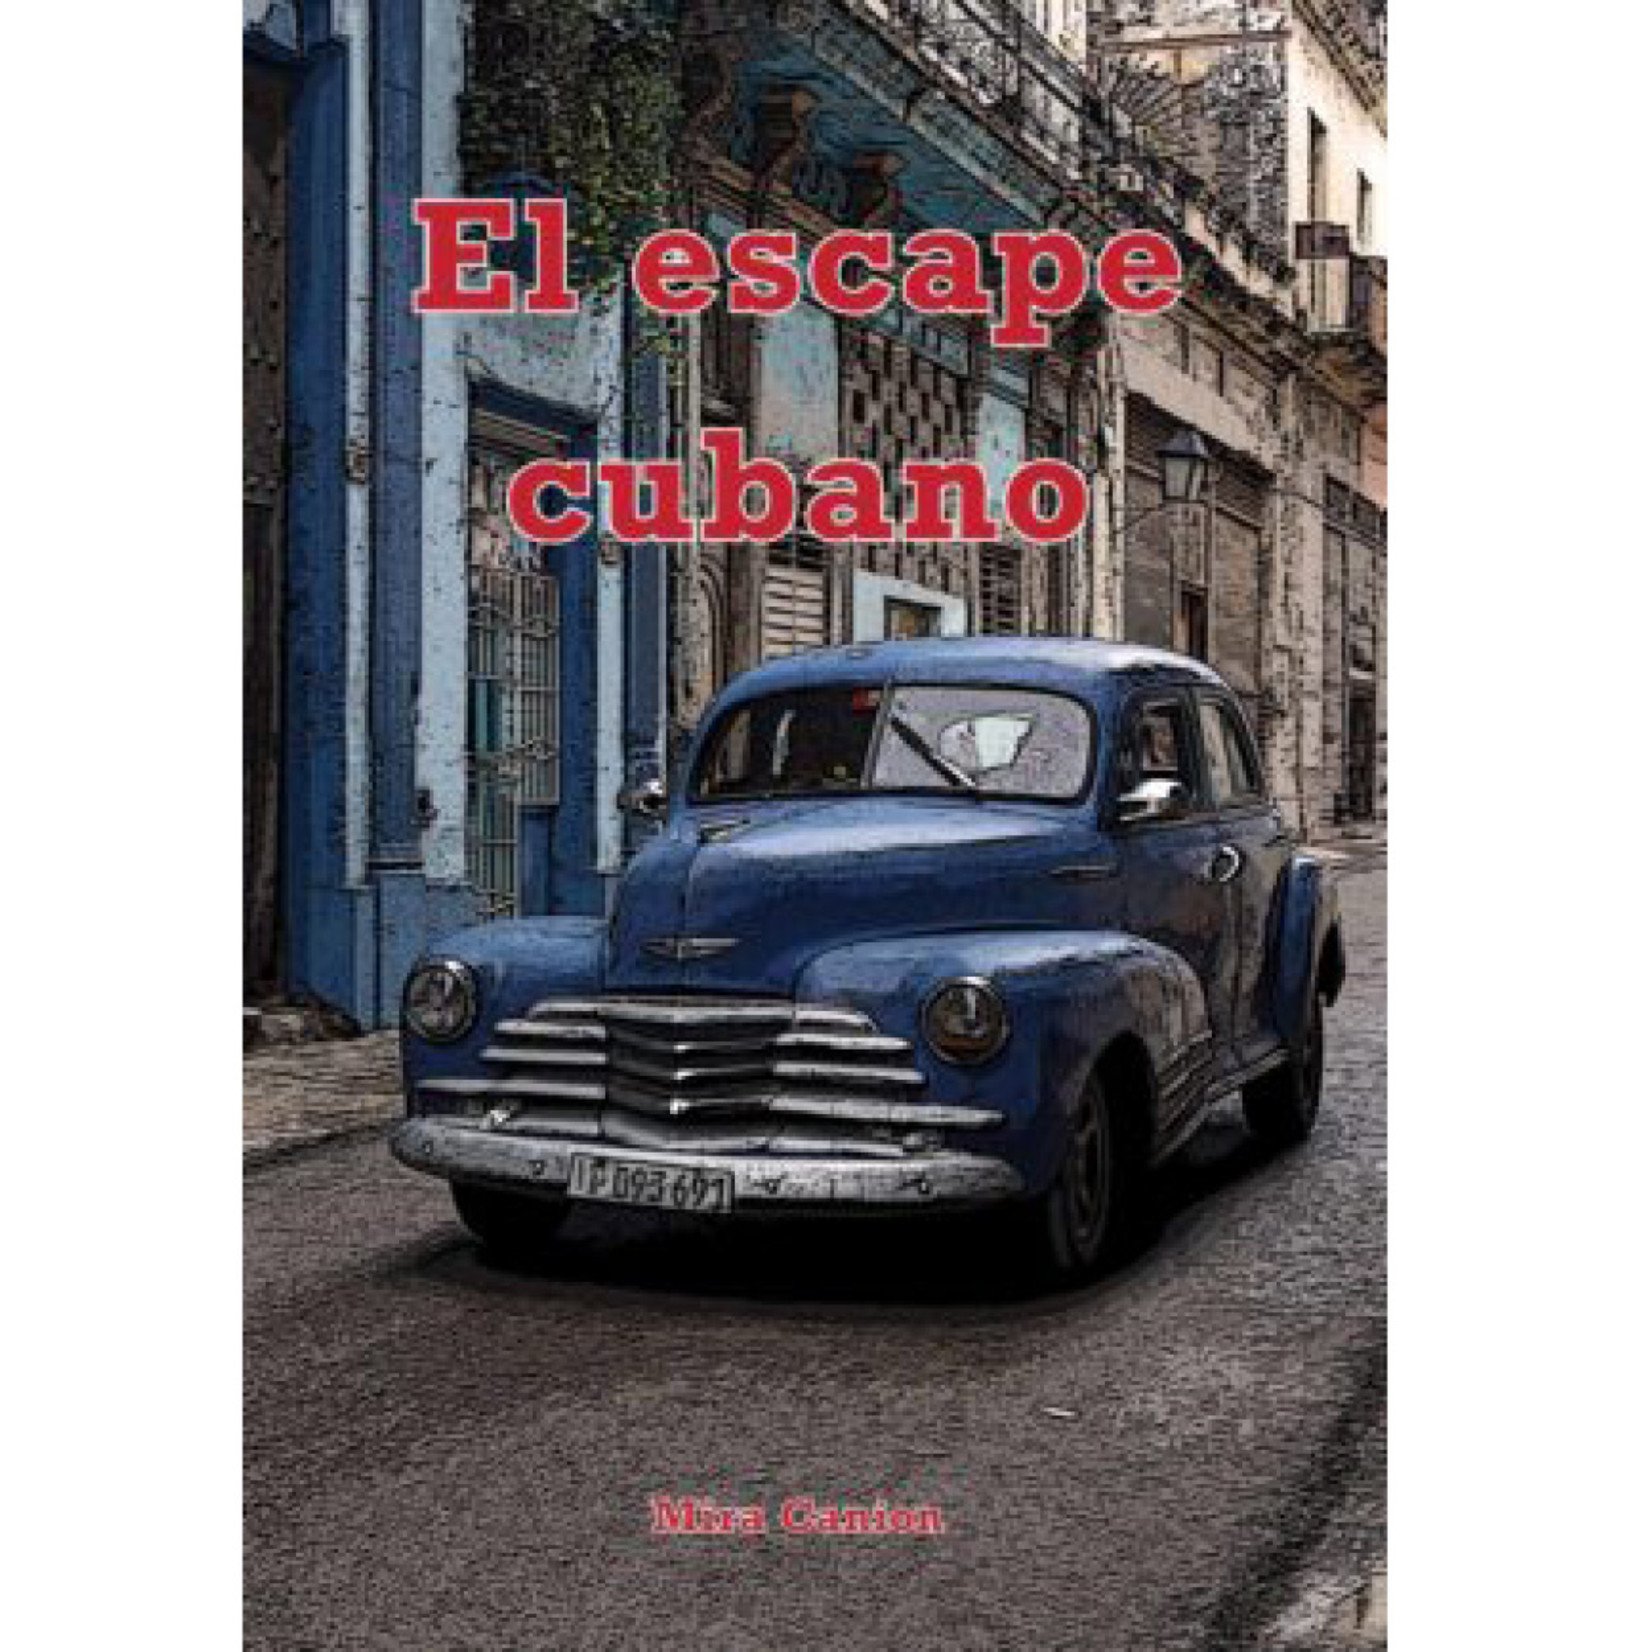 El escape cubano